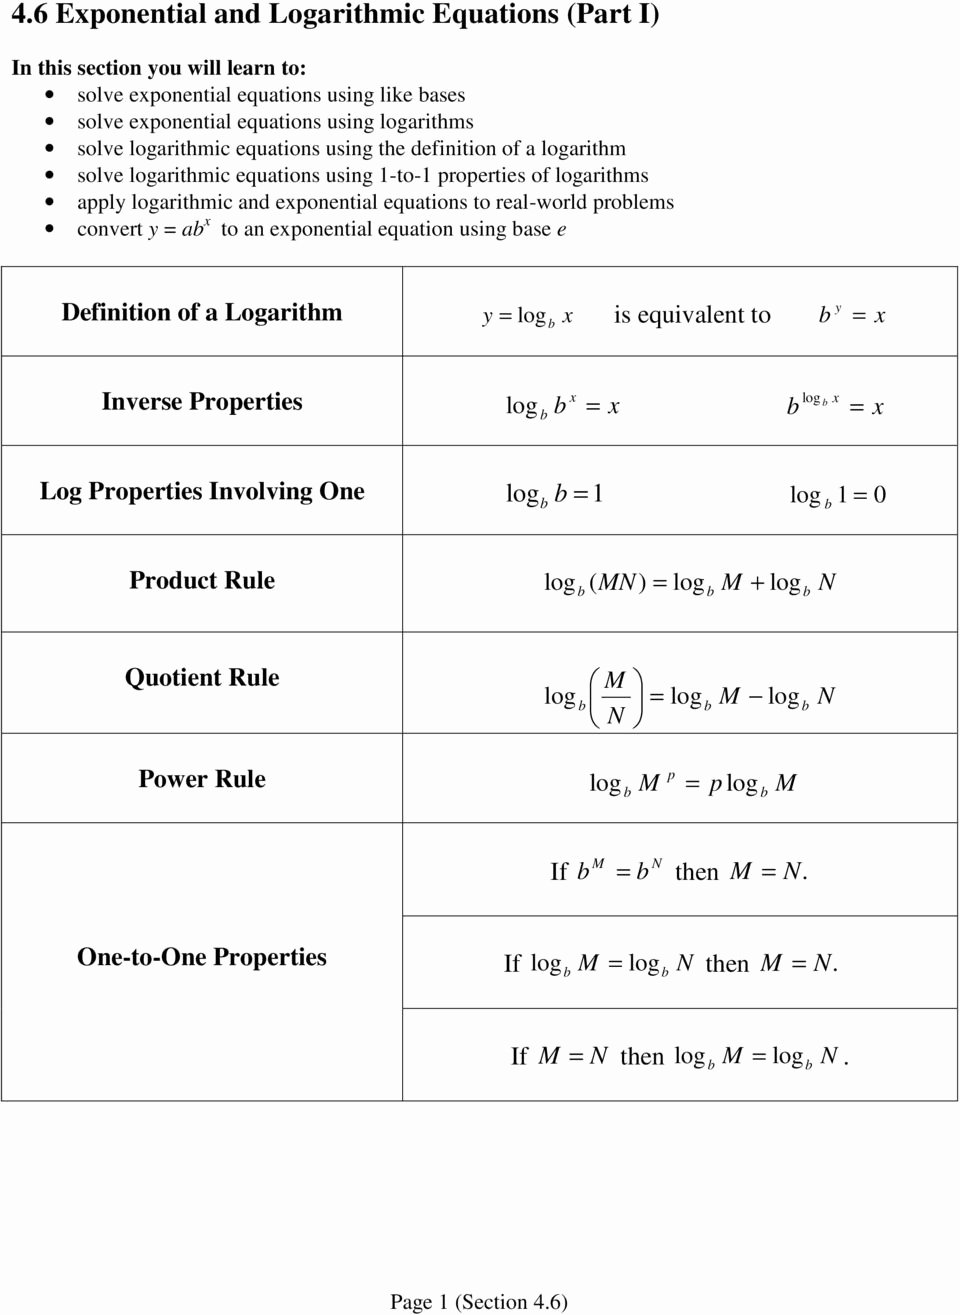 Solving Logarithmic Equations Worksheet Luxury solving Exponential Equations without Logarithms Worksheet